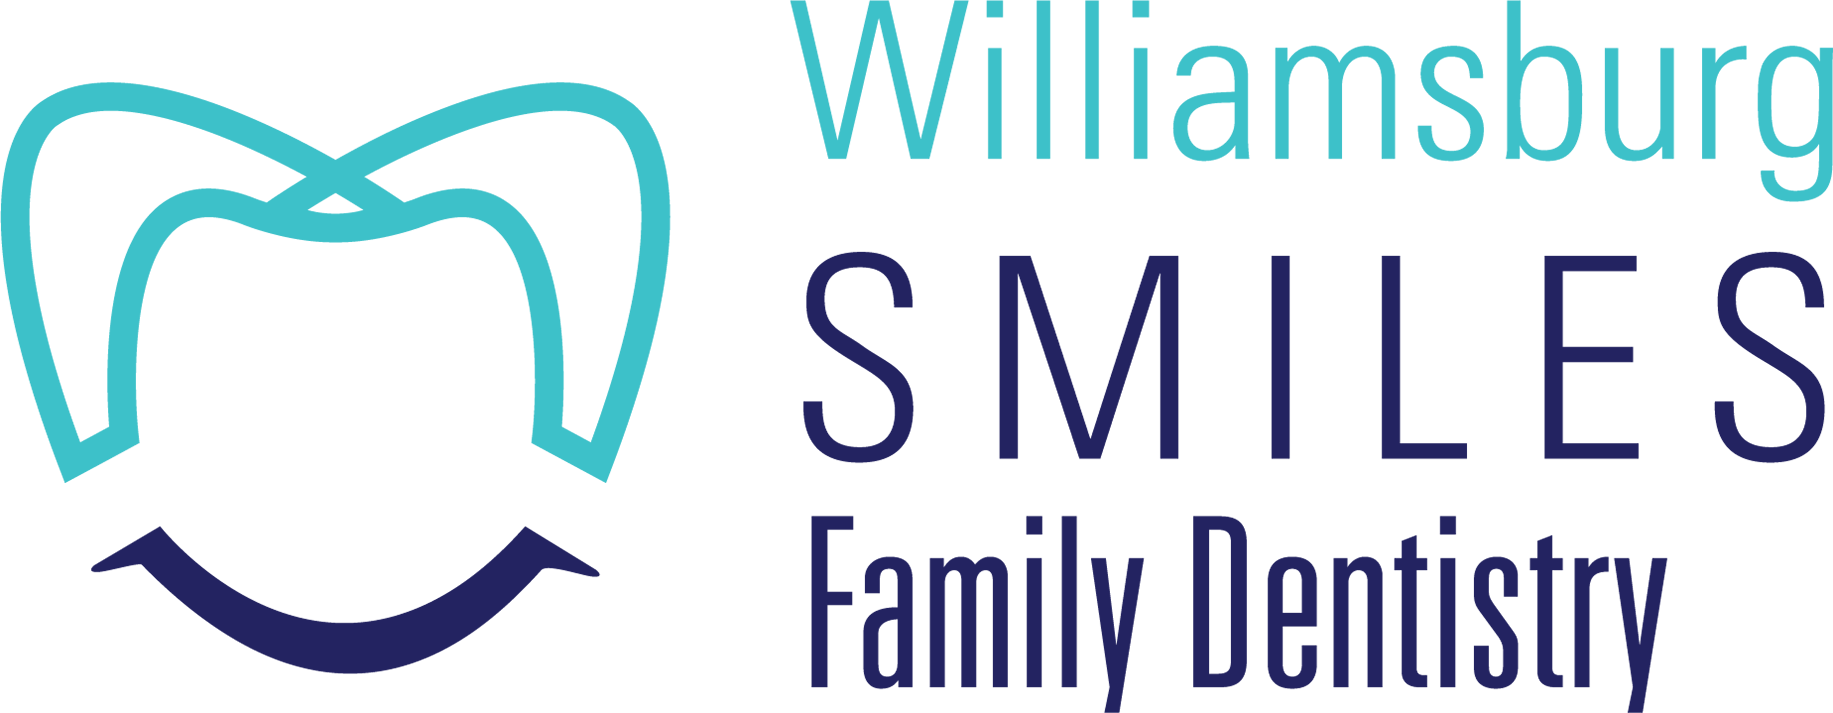 Williamsburg Logo